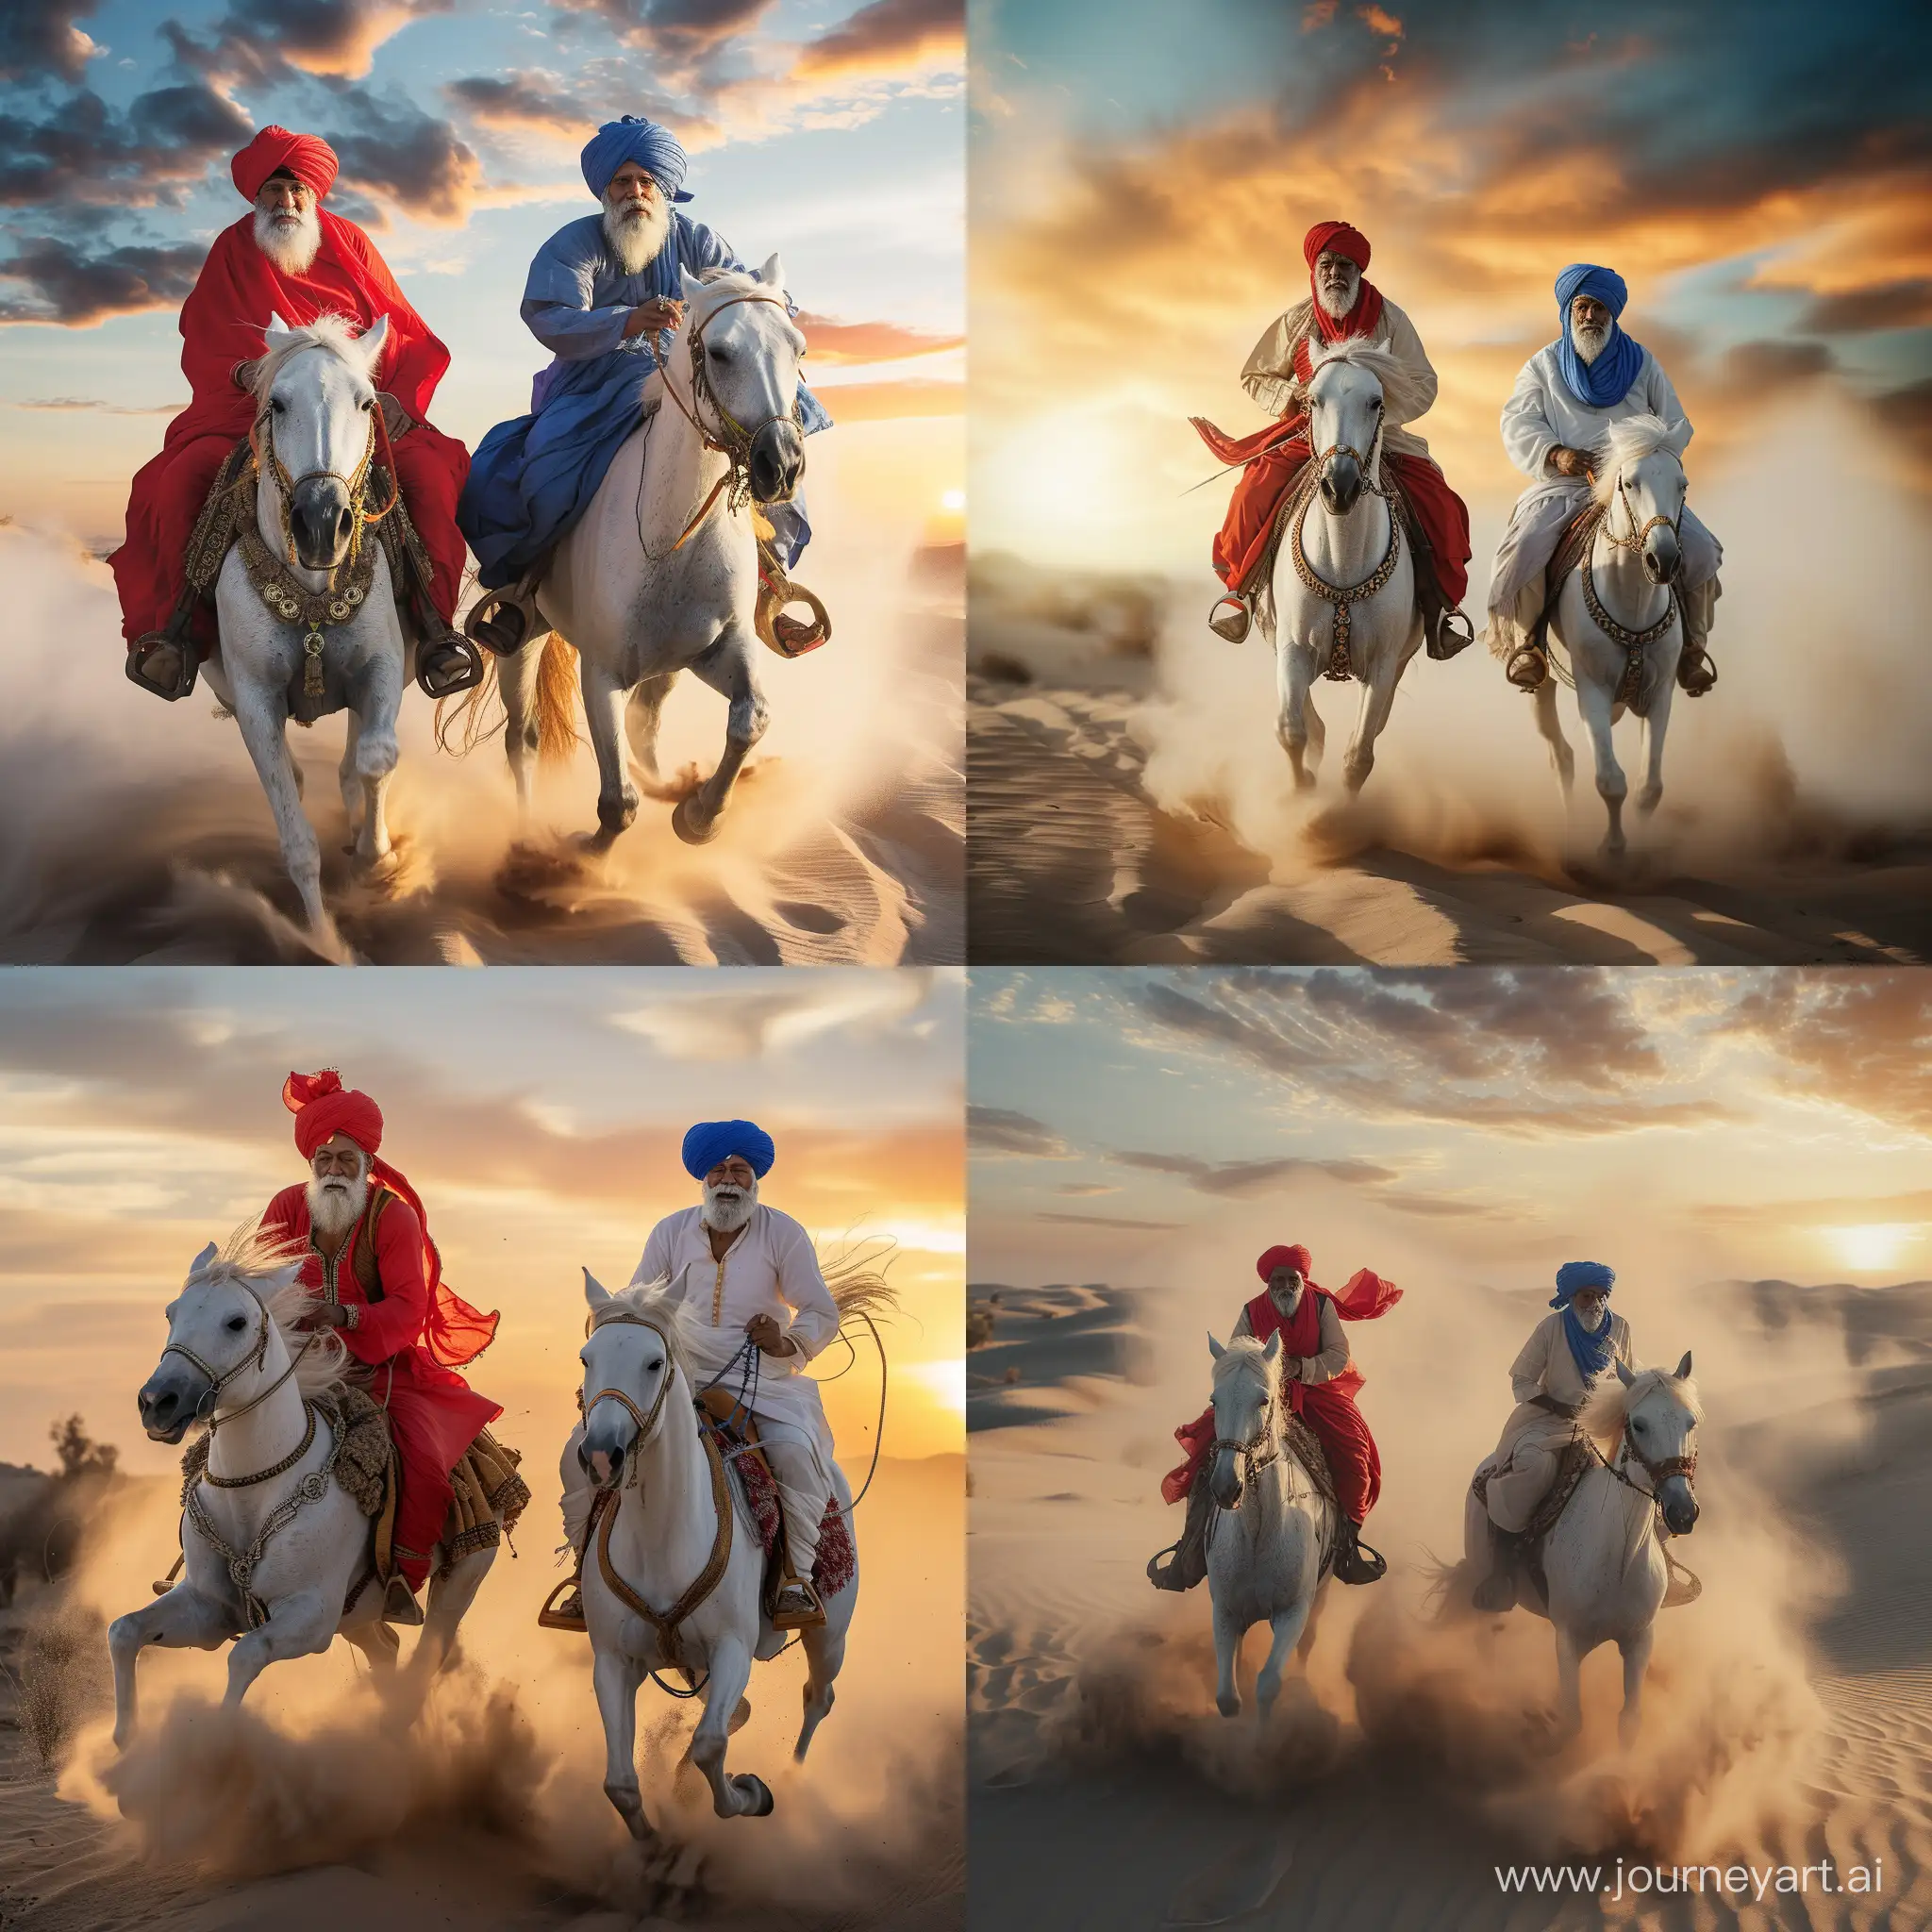 Elderly-Rabari-Riders-in-Red-and-Blue-Turbans-Galloping-Through-Desert-Sunset